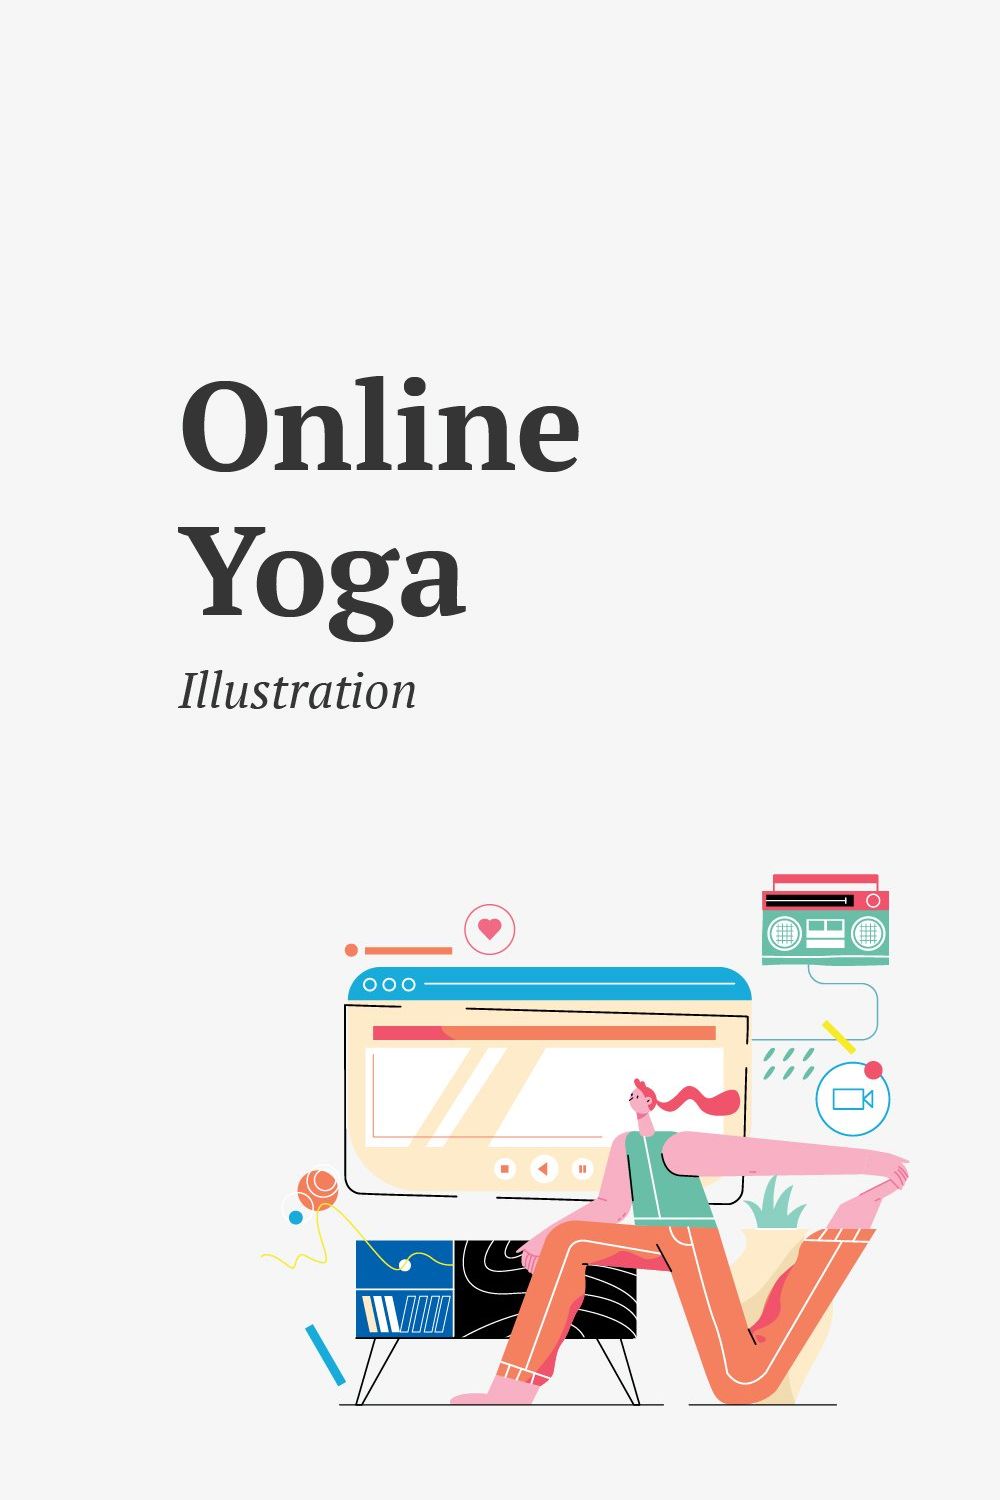 Online Yoga Illustration pinterest preview image.